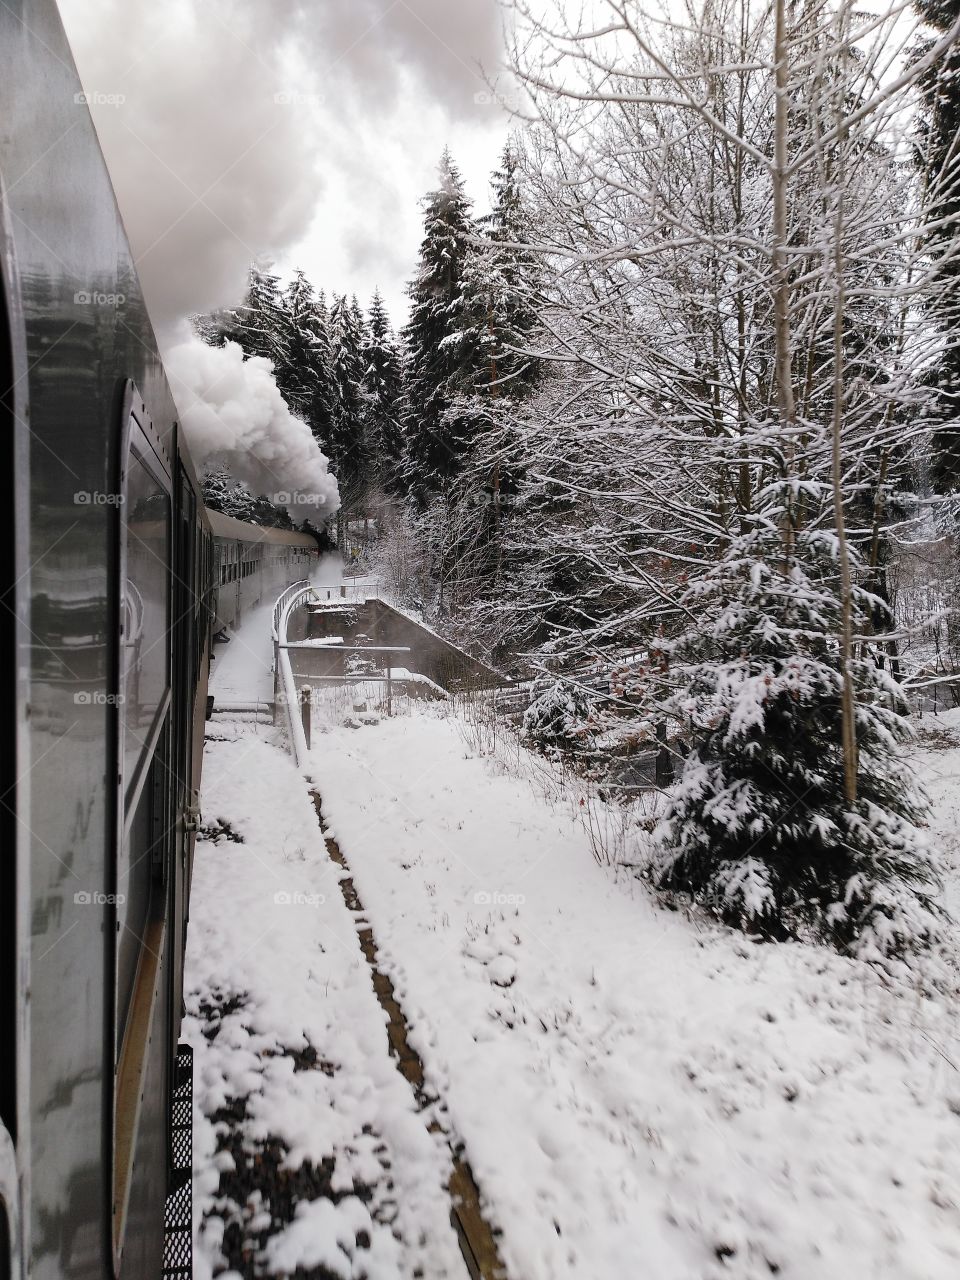 Steam train ride